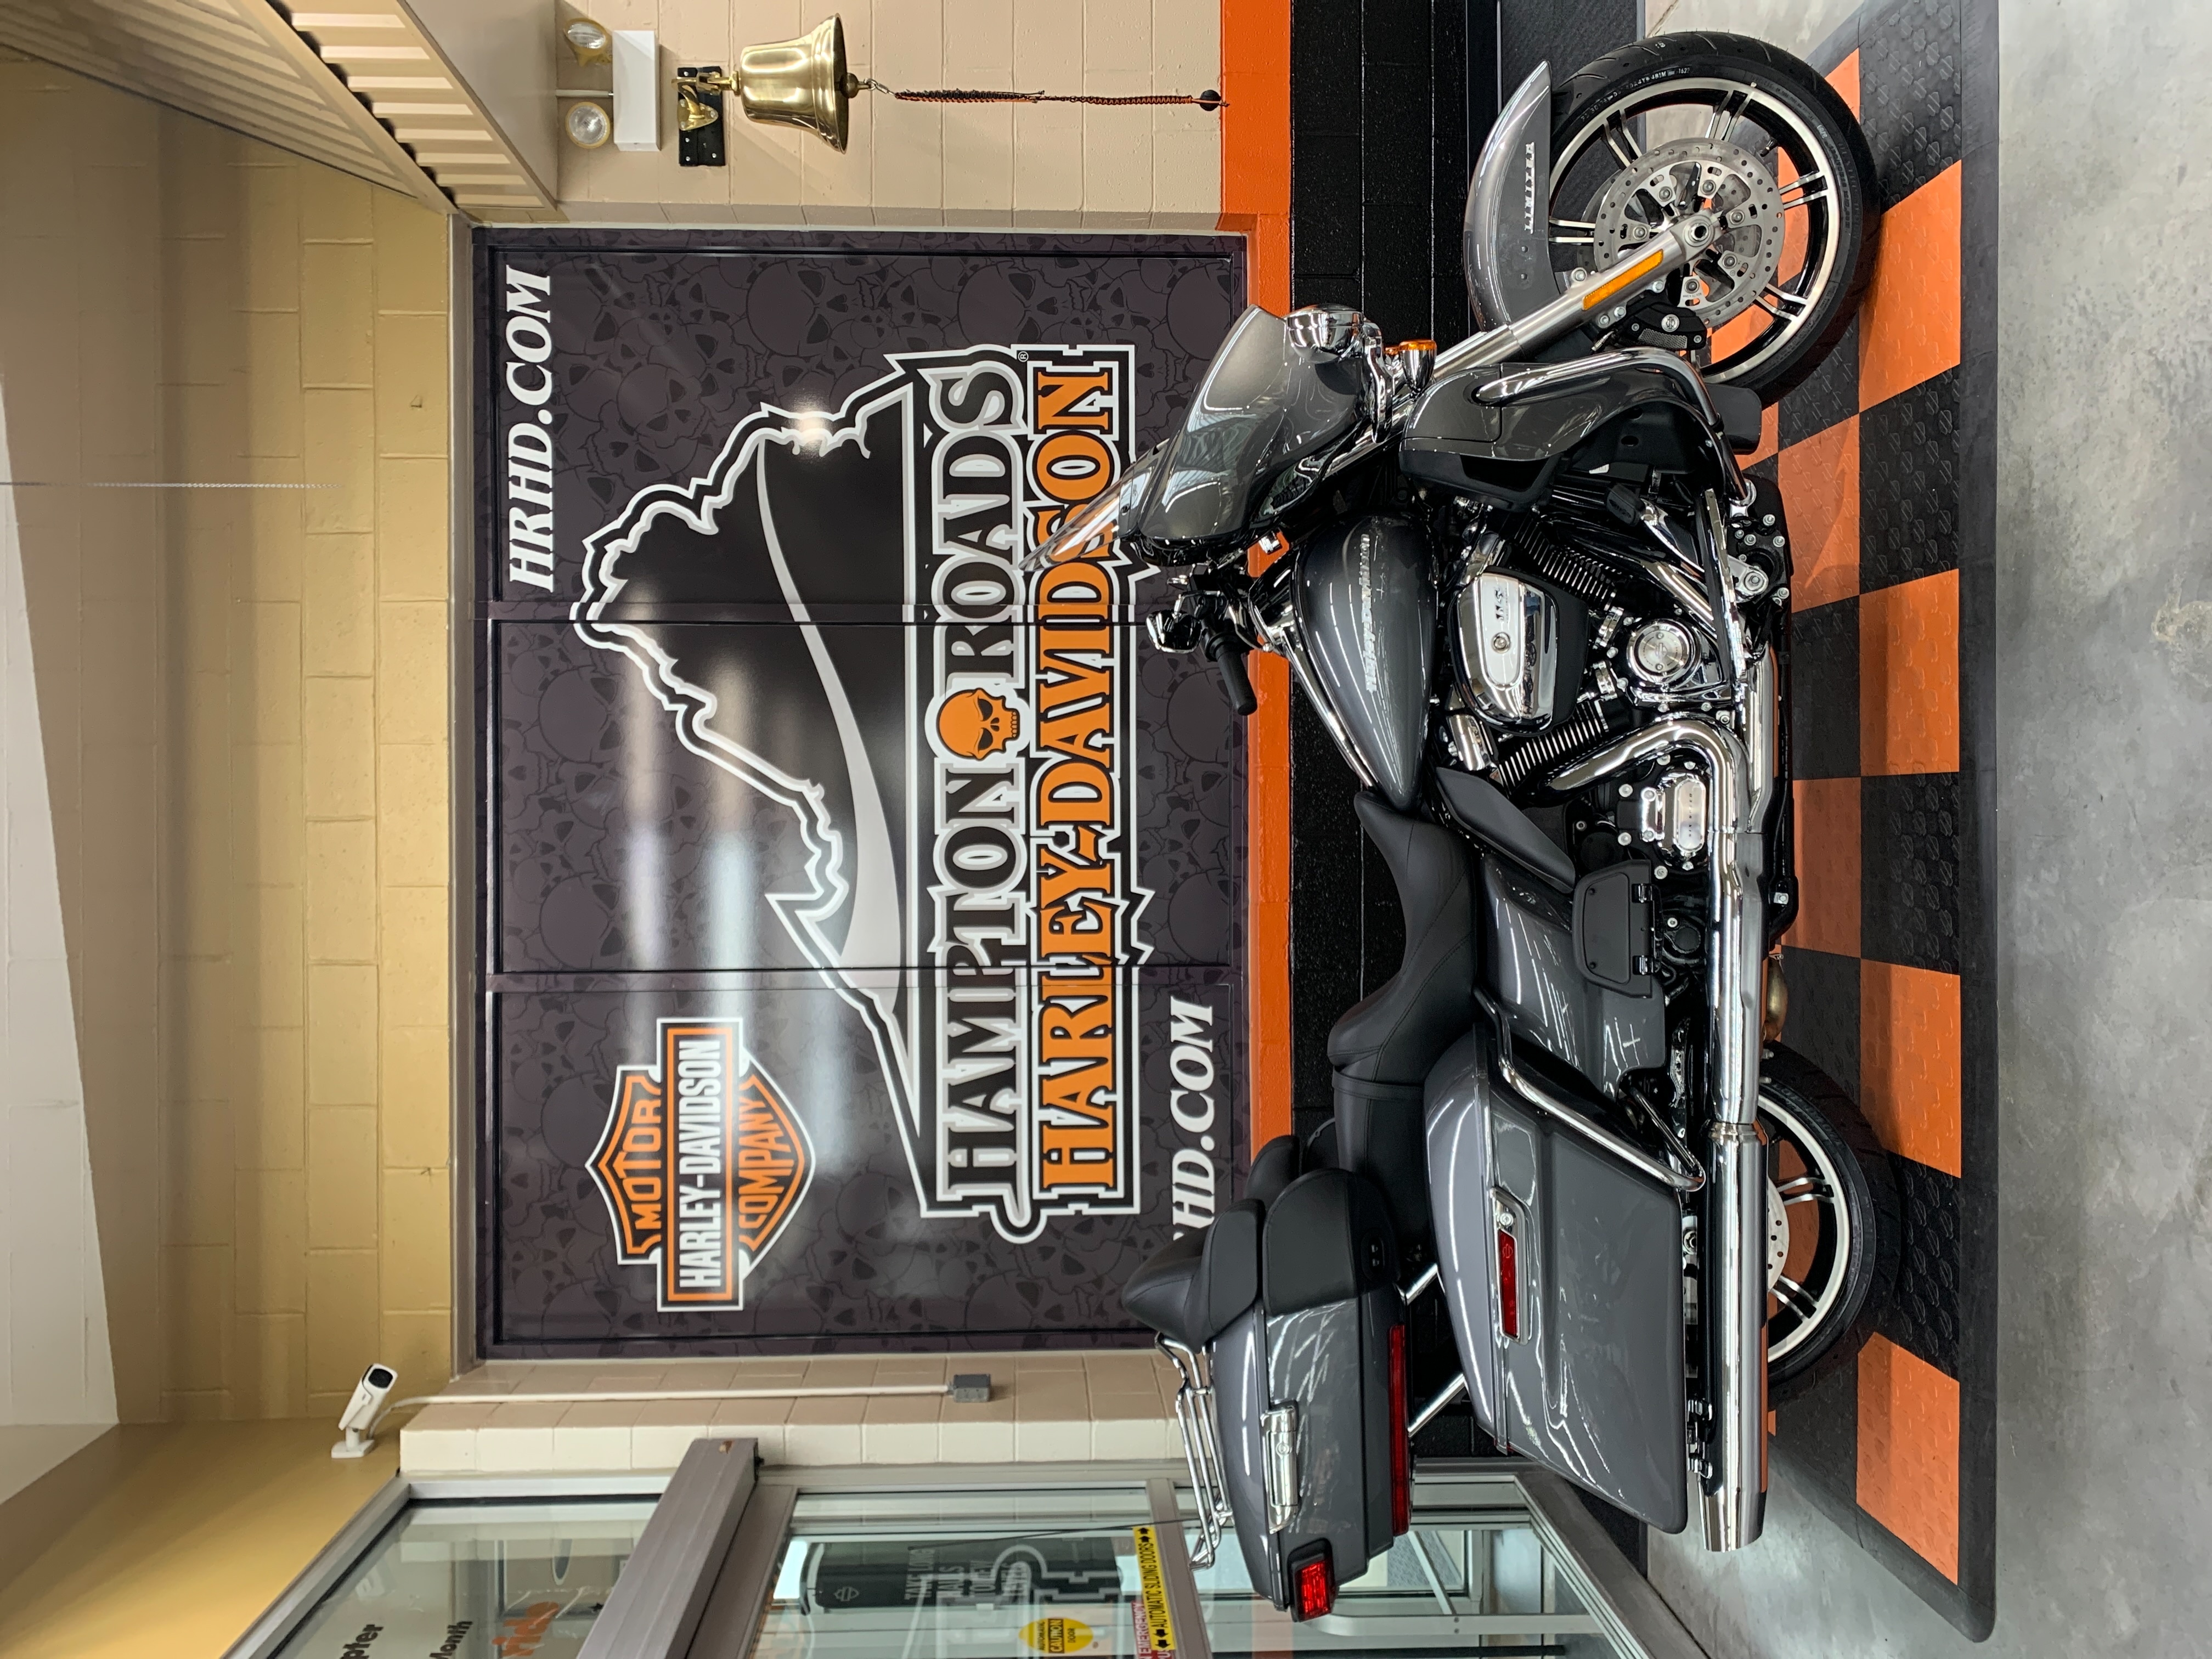 2022 Harley-Davidson Electra Glide Ultra Limited at Hampton Roads Harley-Davidson